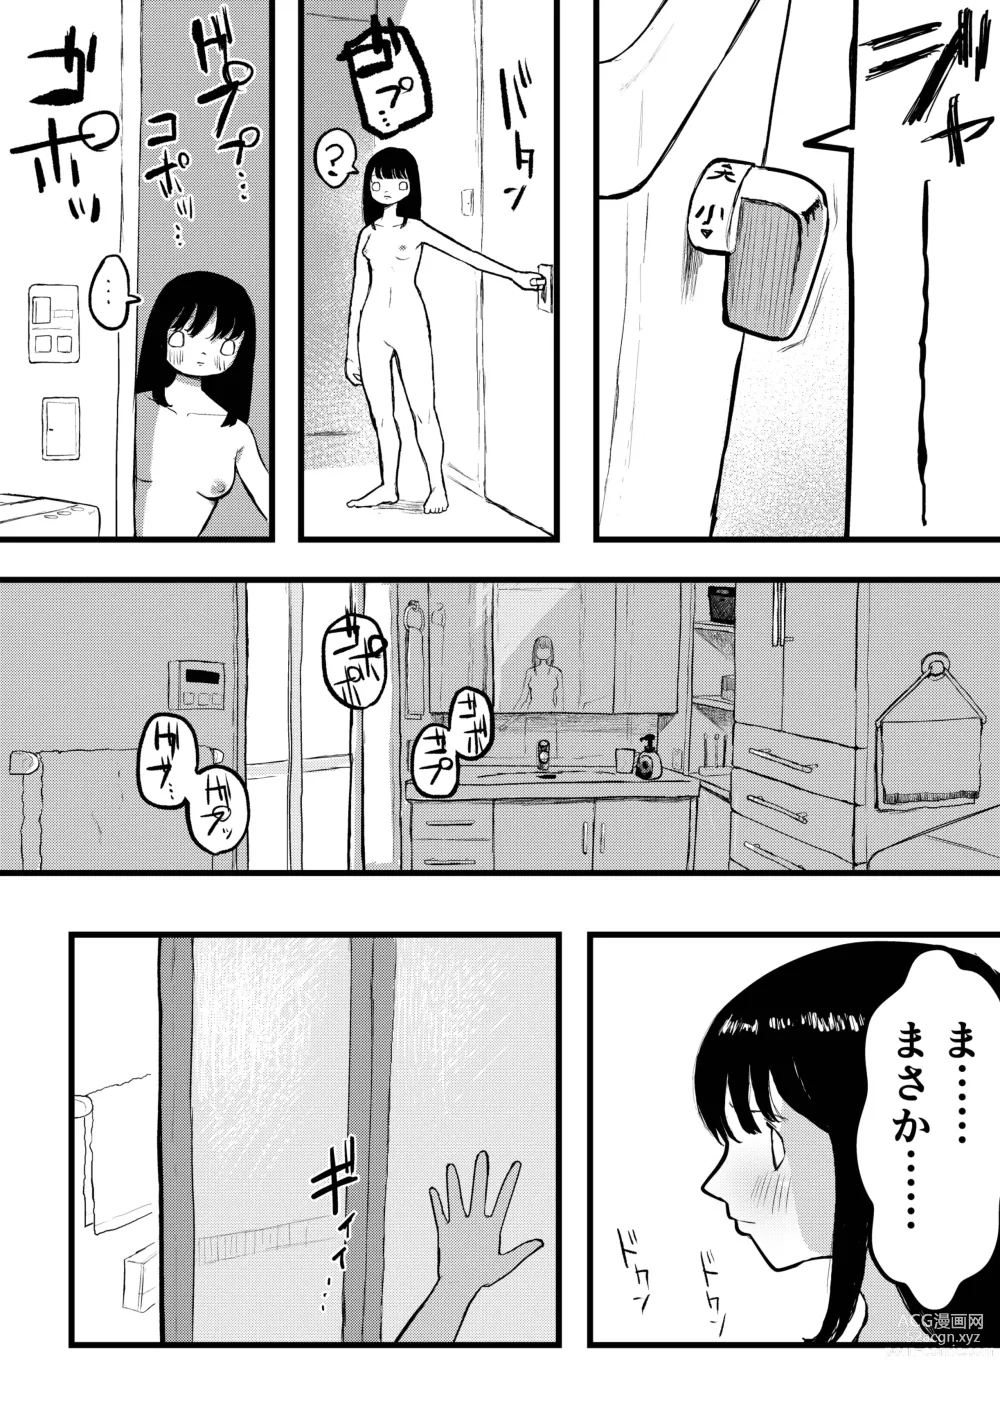 Page 5 of doujinshi Tentacle bath